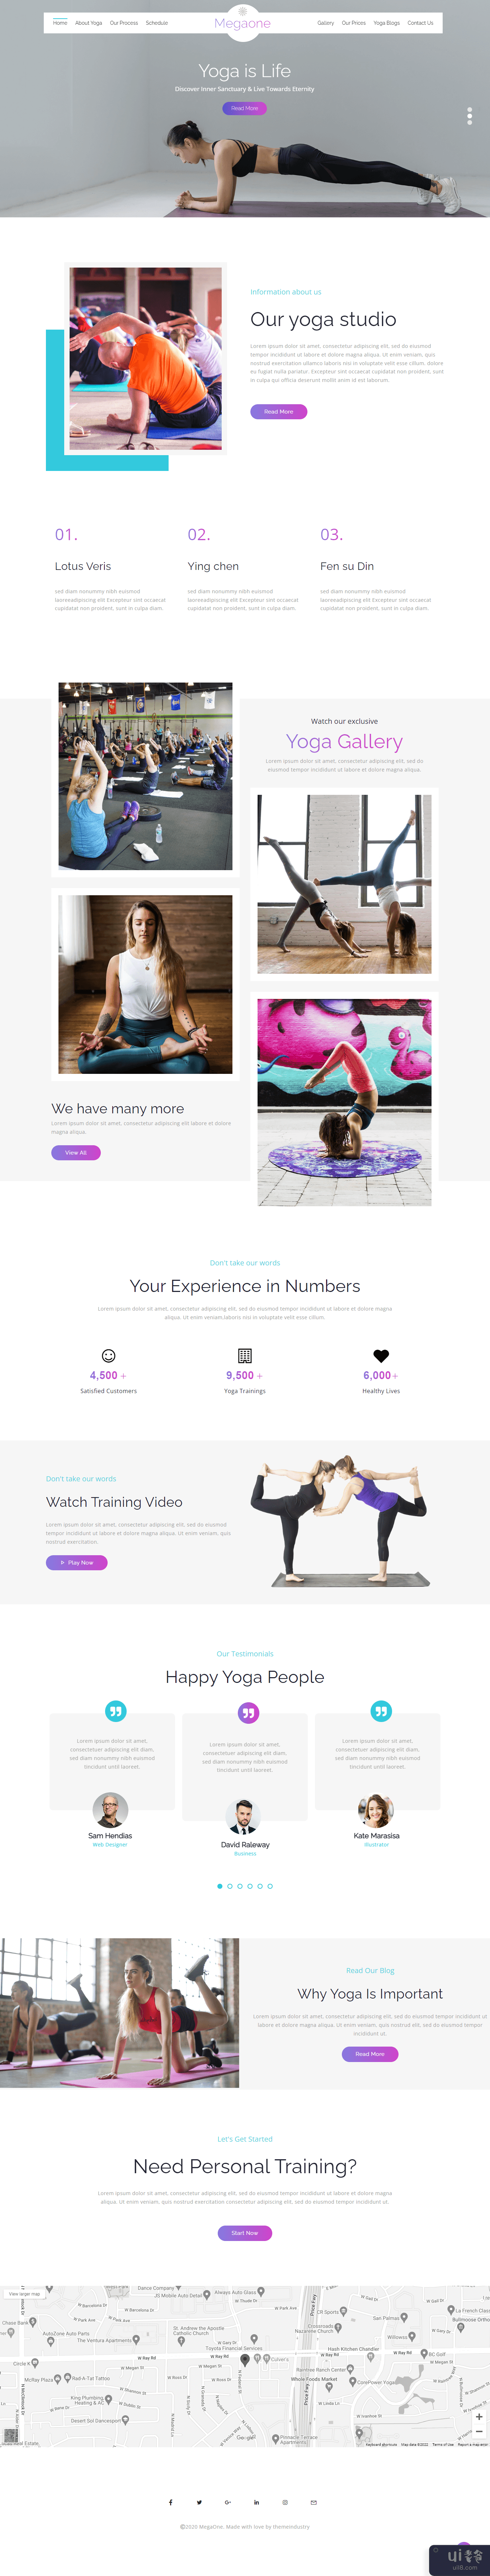 瑜伽工作室和健身中心网页模板(Yoga Studio & Fitness Center Web Template)插图